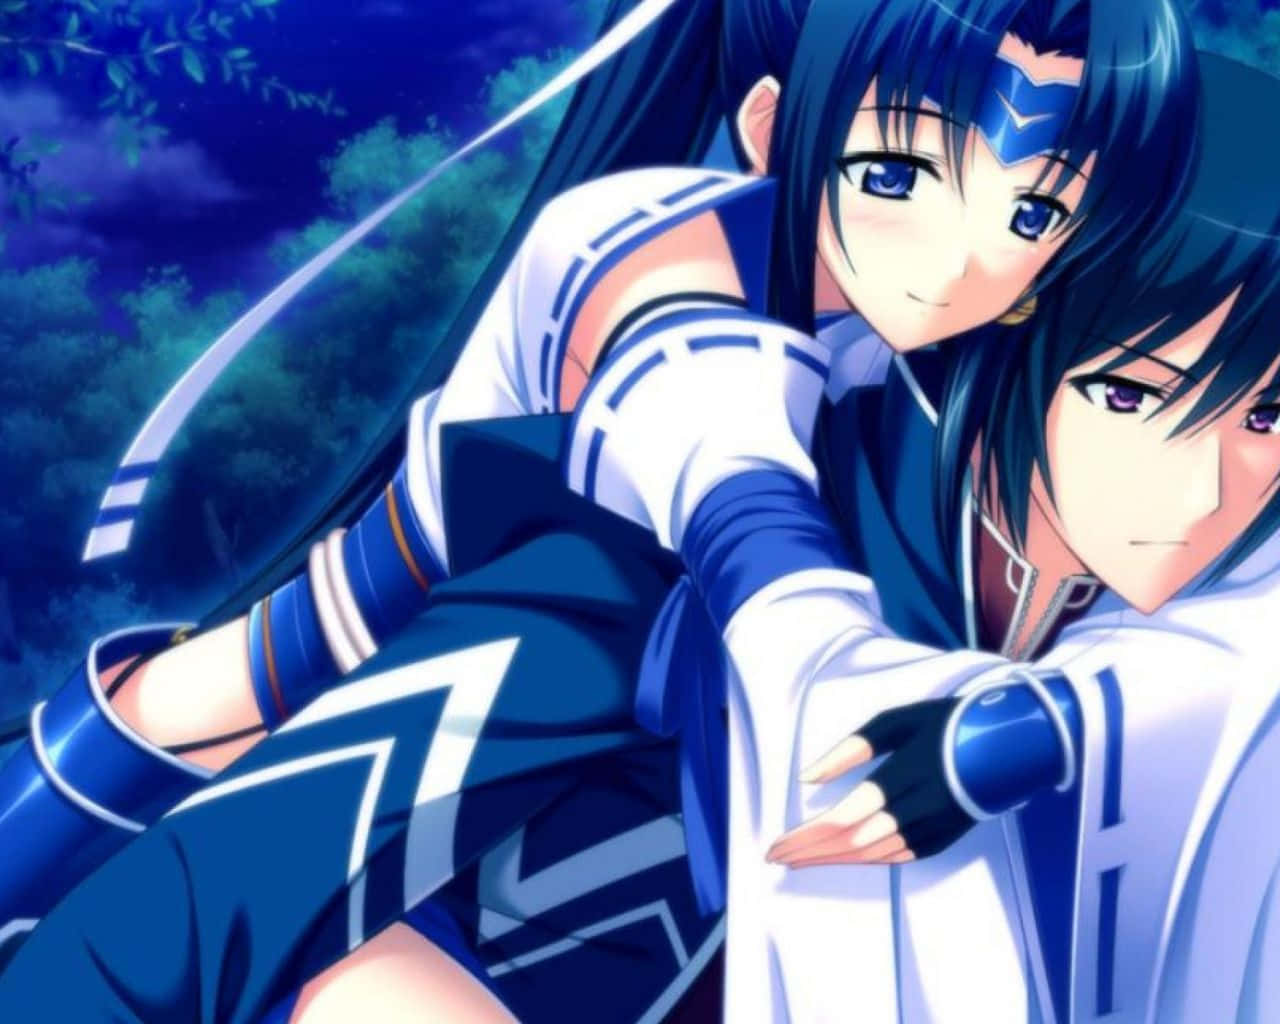 Captivating Cute Anime Couple Embrace